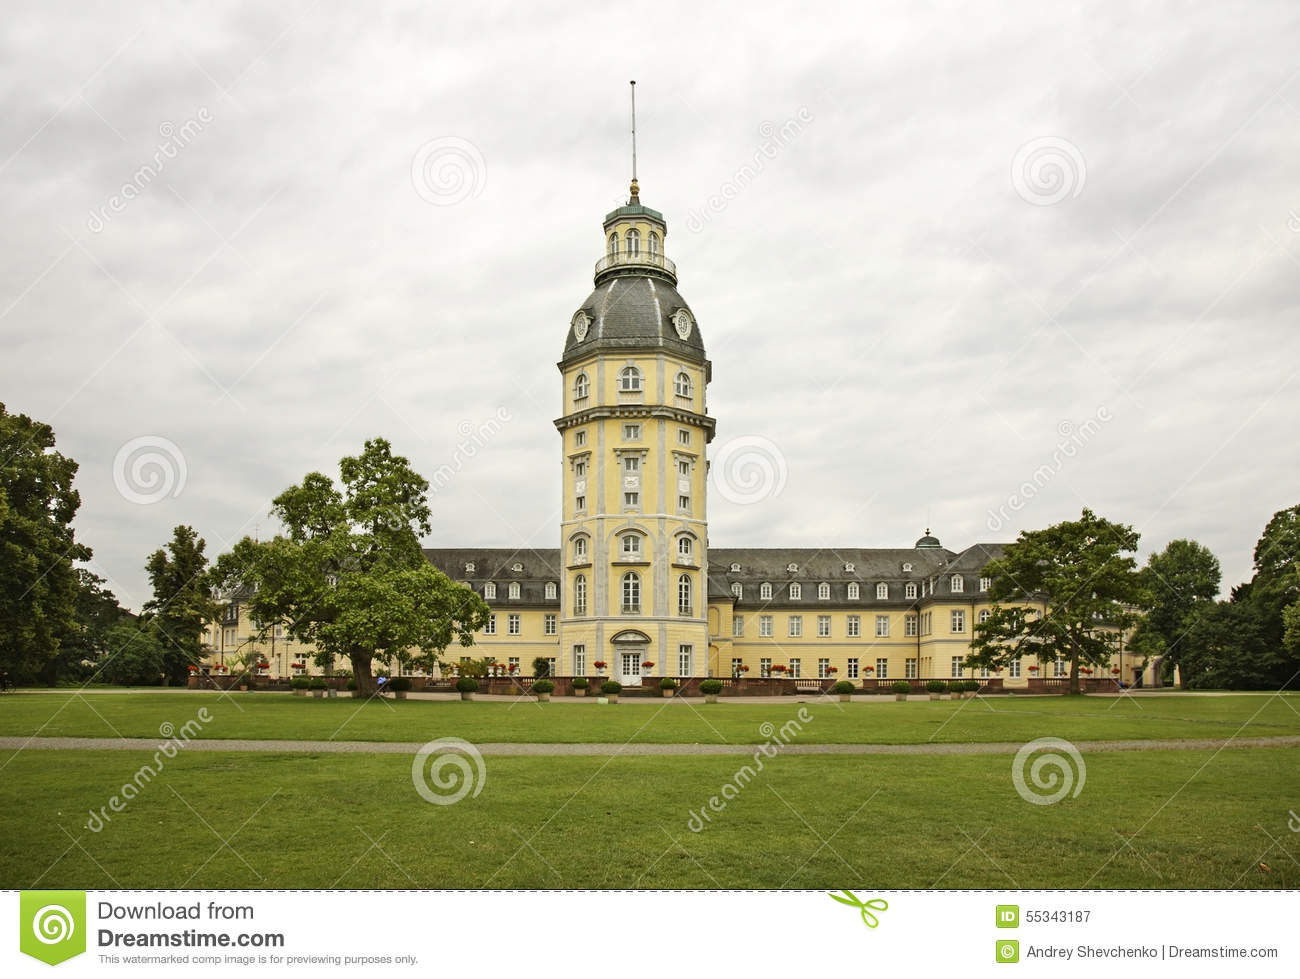 Images of Karlsruhe Palace | 1300x979